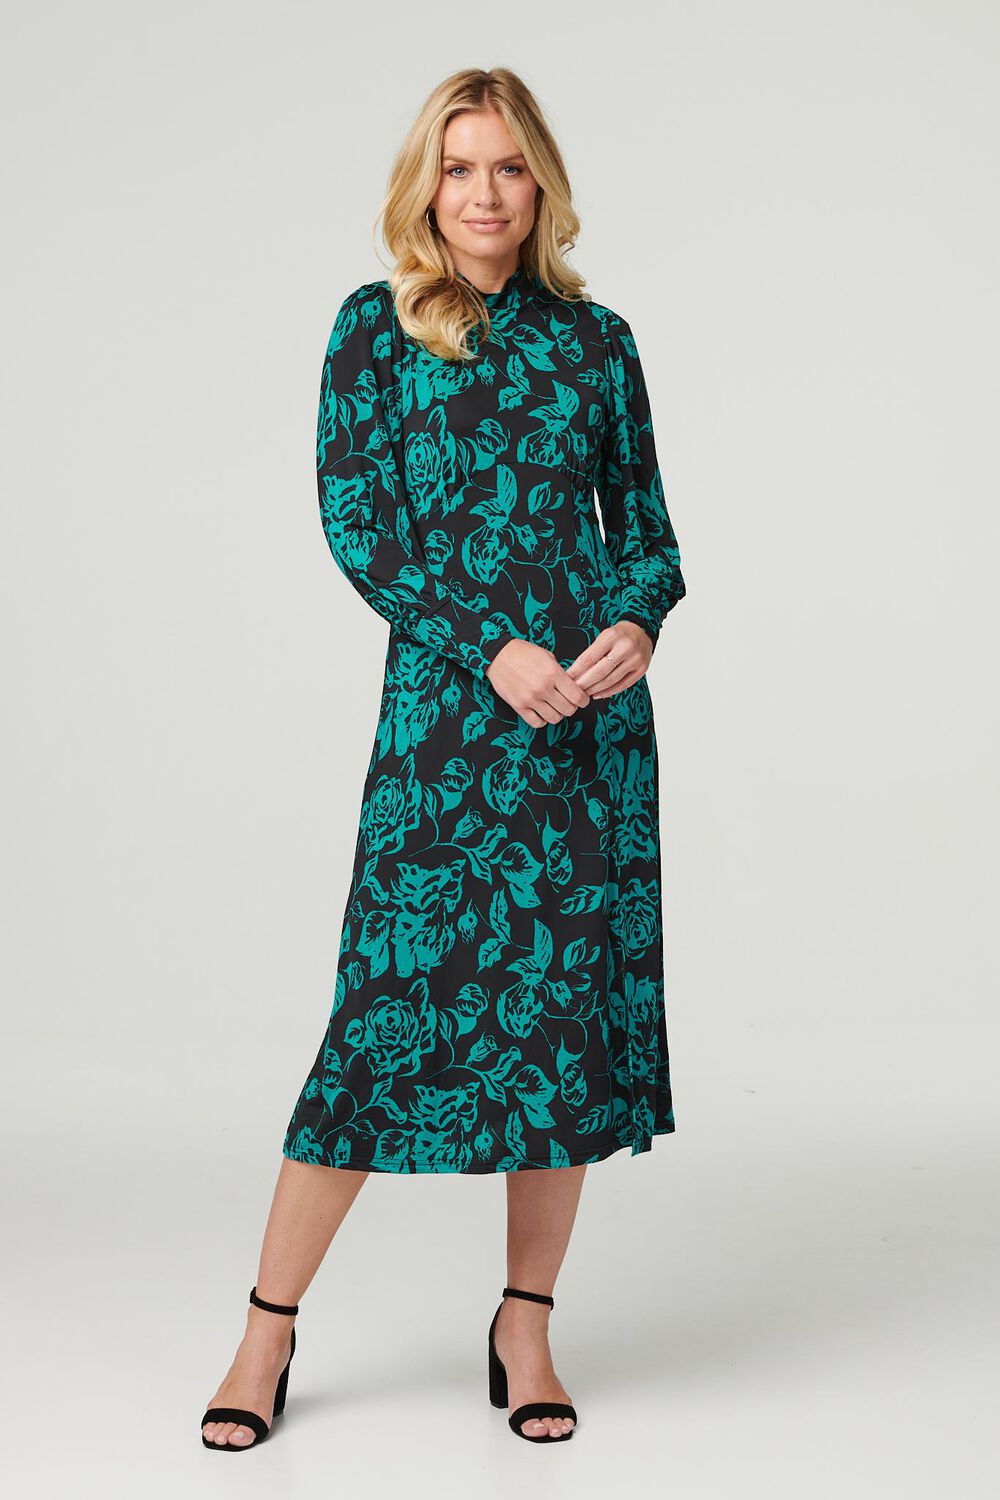 Izabel London Women’s Green and Black Floral Print Long Sleeve High Neck Split Midi Dress, Size: 16